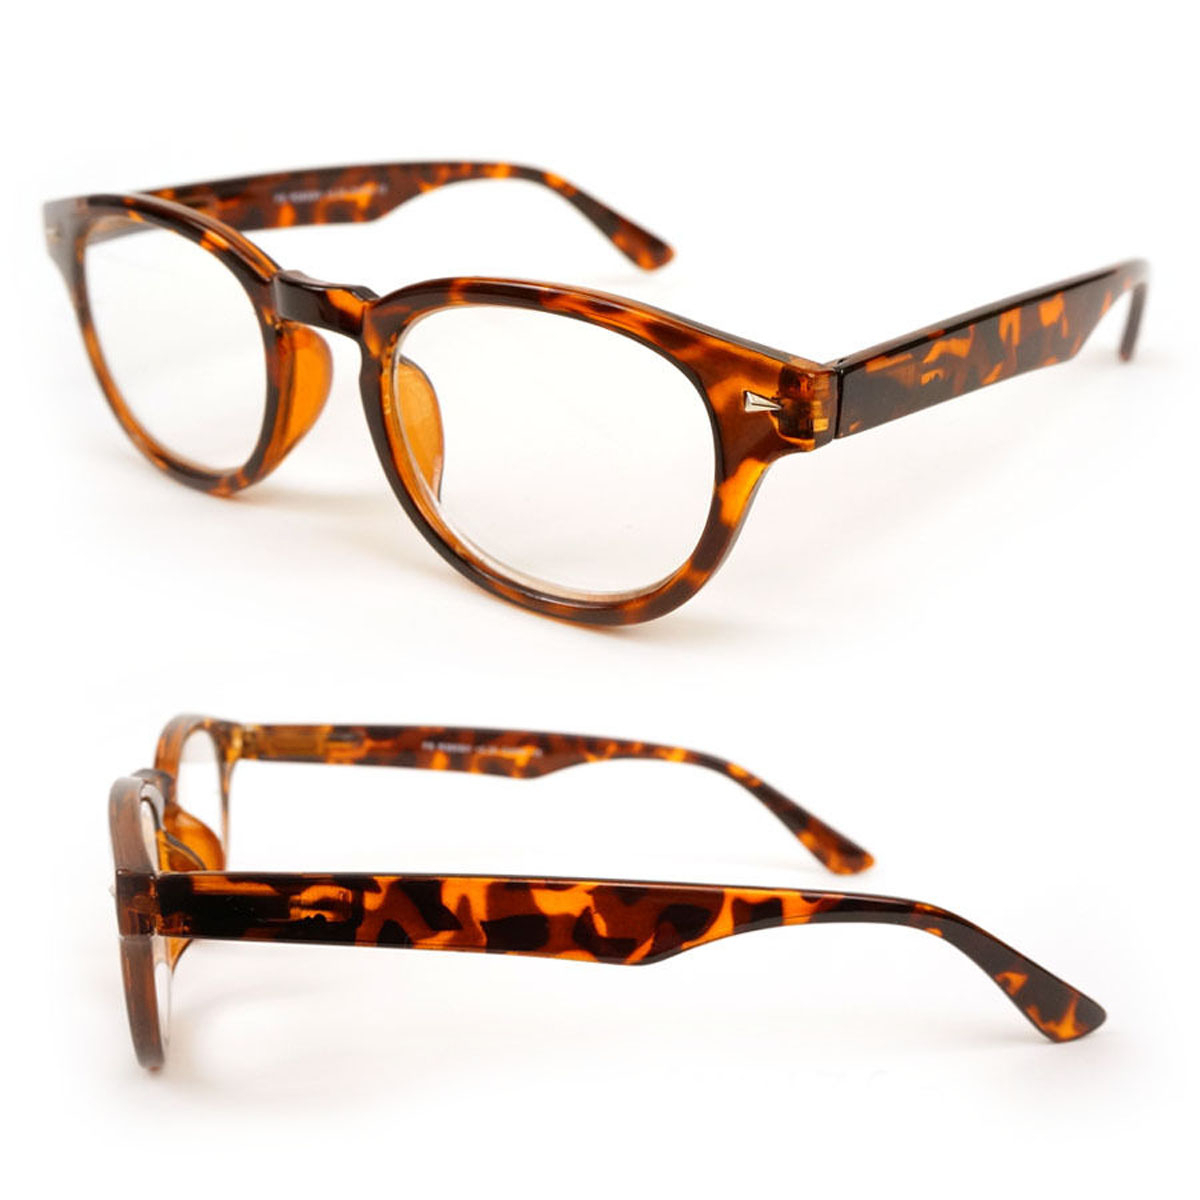 Medium Round Classic Frame Reading Glasses Geek Retro Vintage Style 100-375 - Brown, +2.25